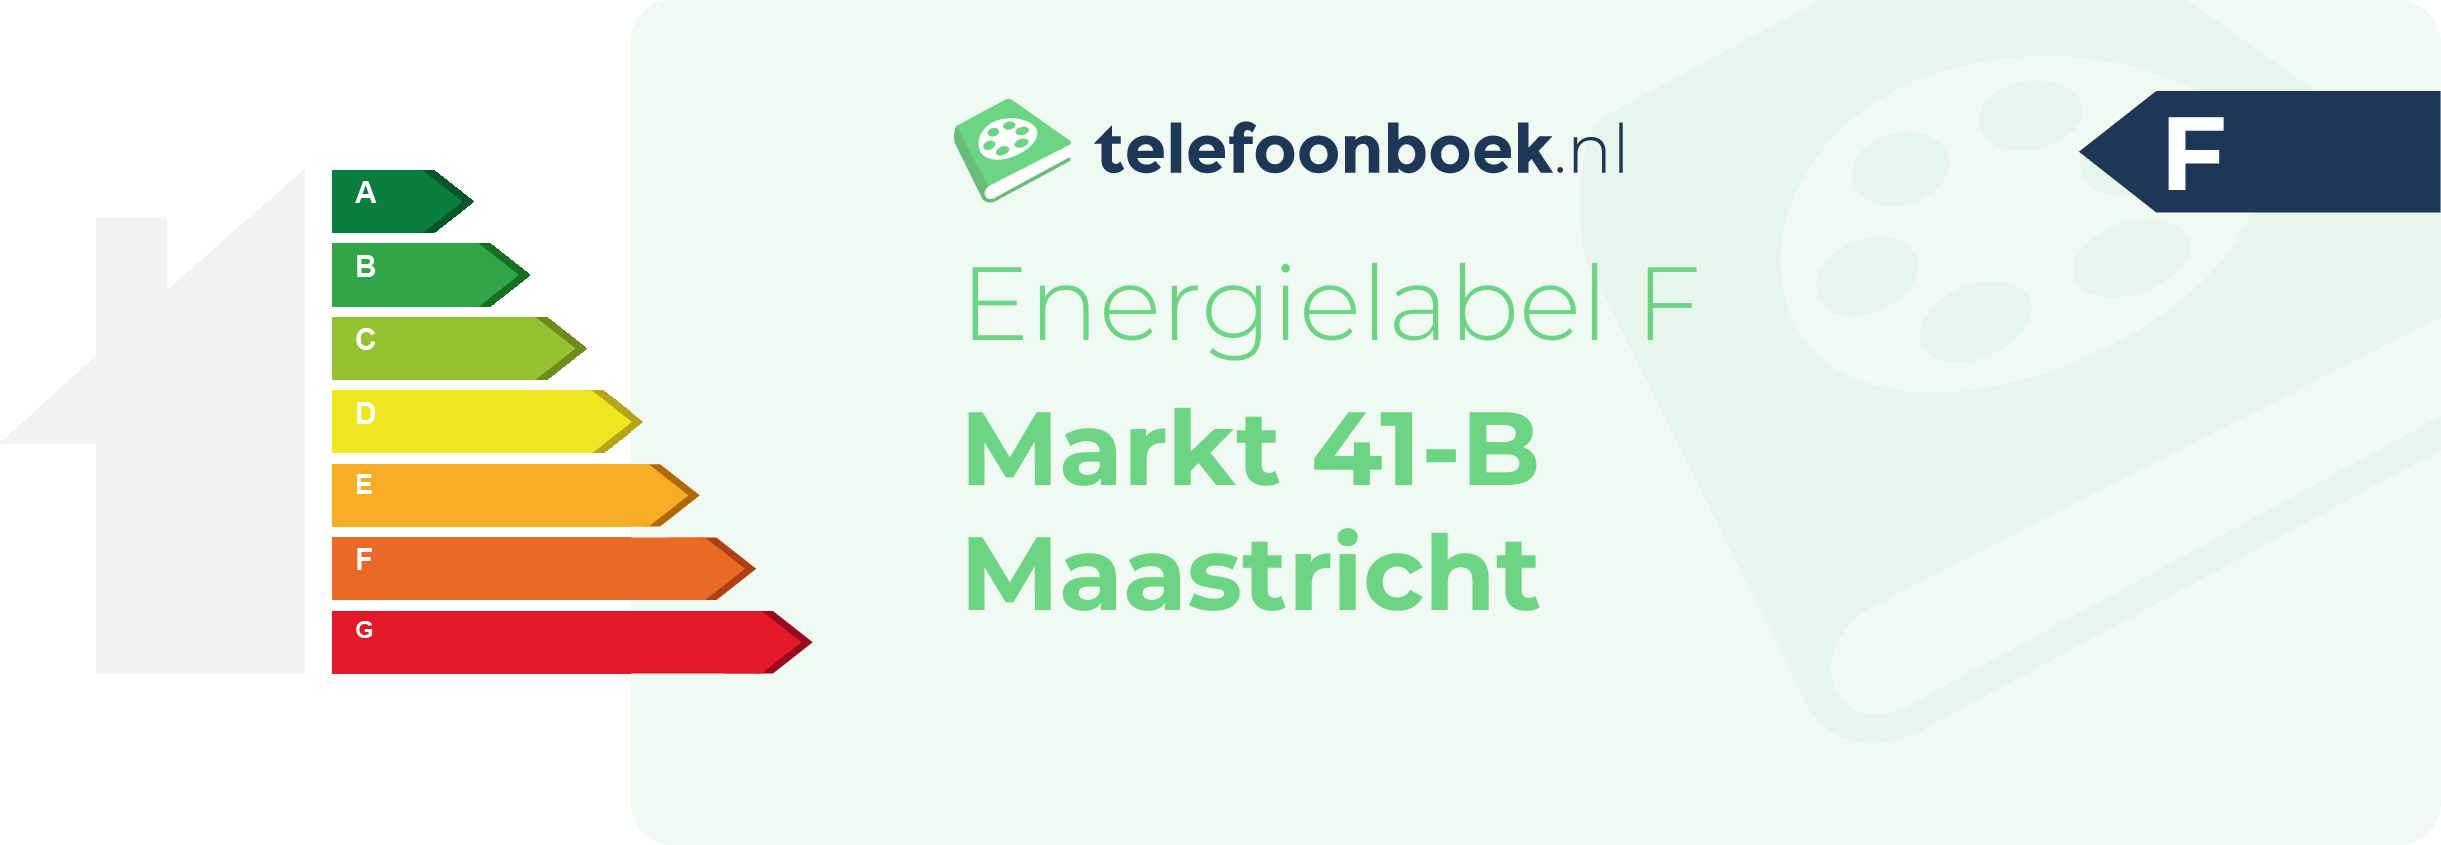 Energielabel Markt 41-B Maastricht